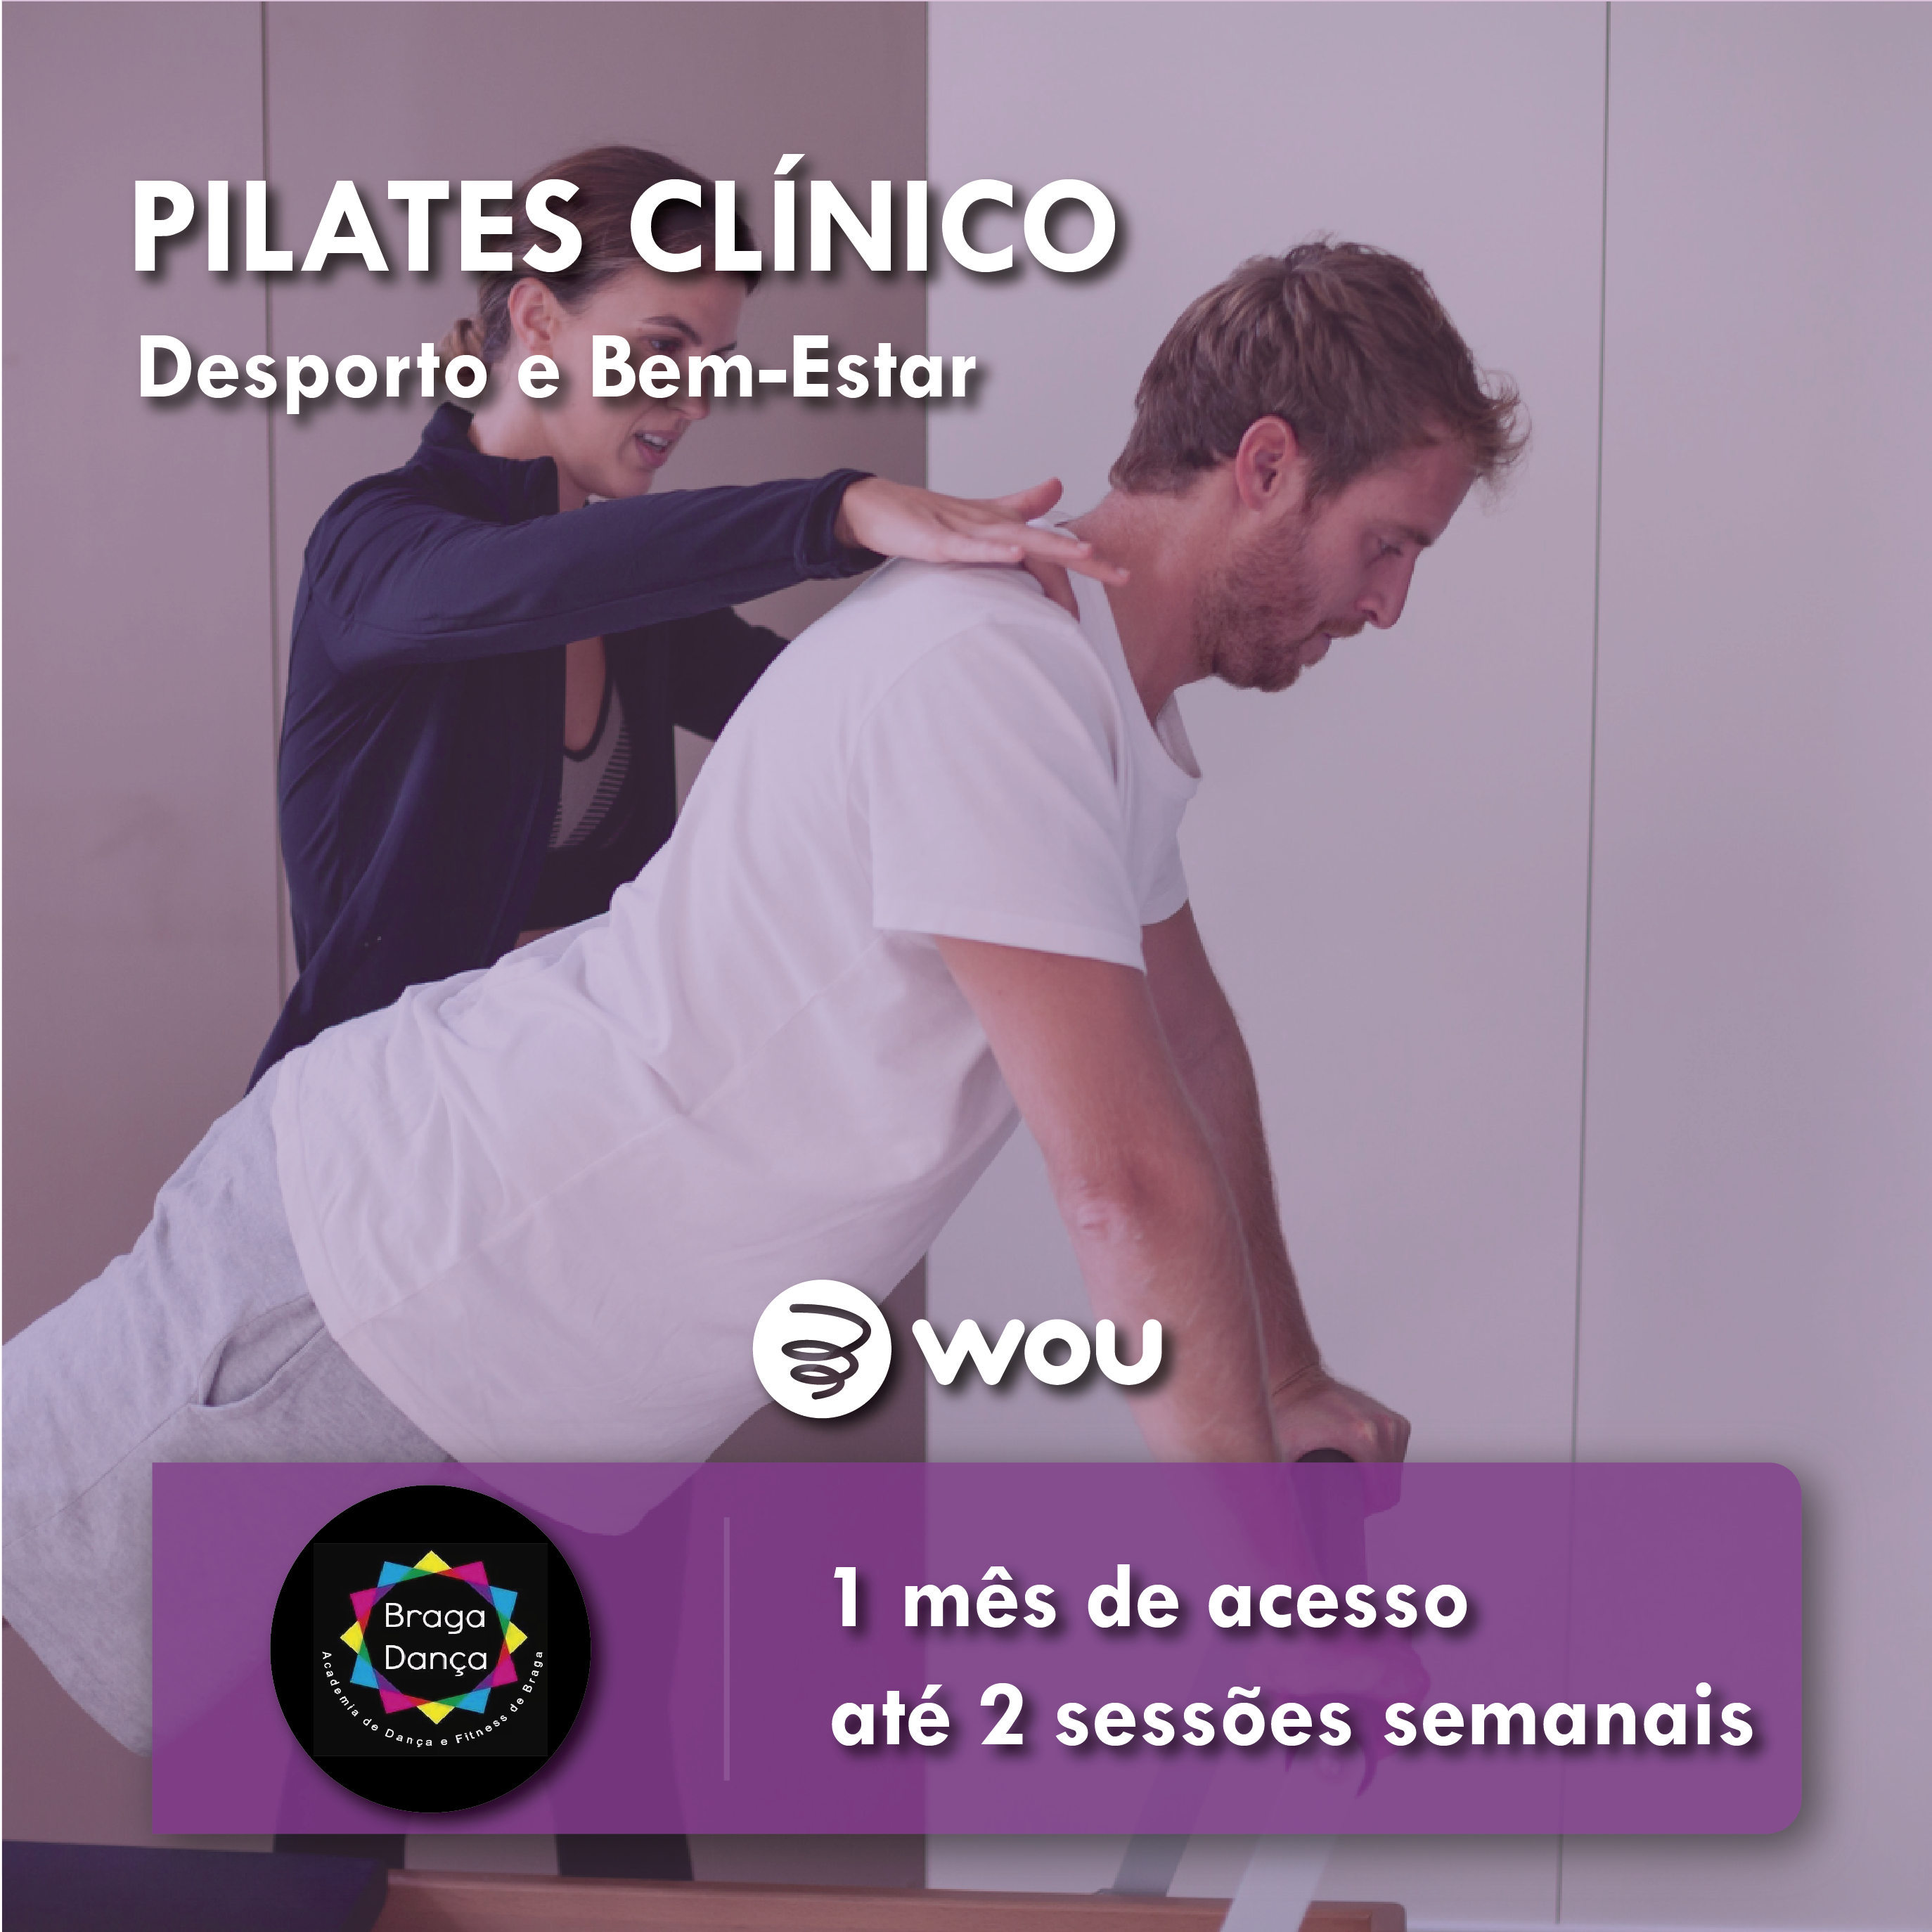 Clinical Pilates in Braga